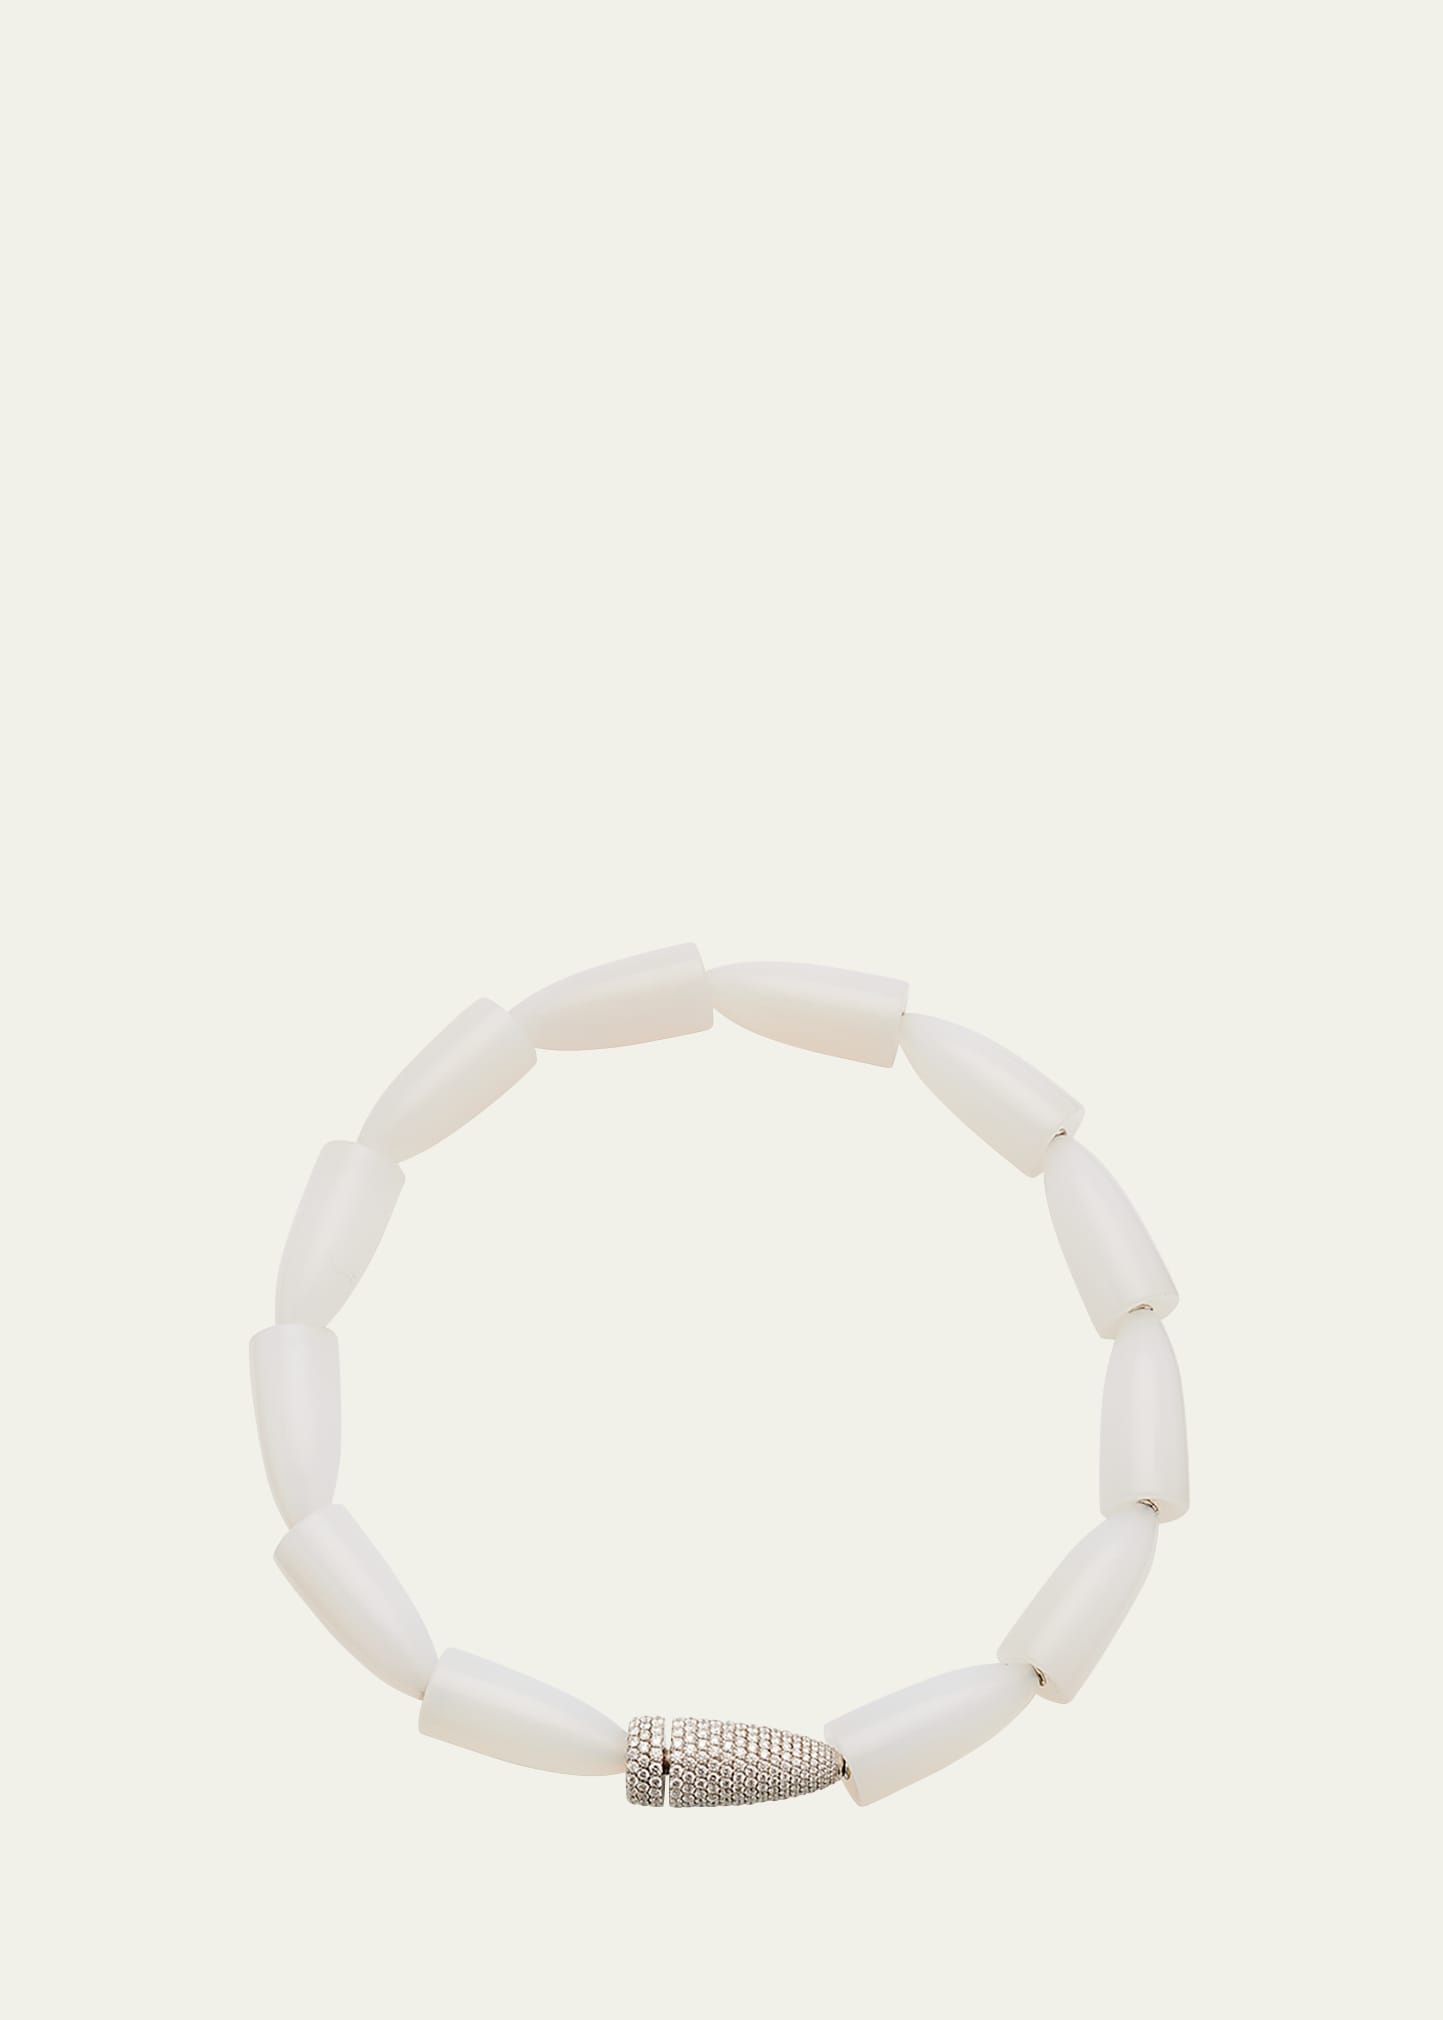 Calla White Agate Necklace with White Gold and Diamond Clasp